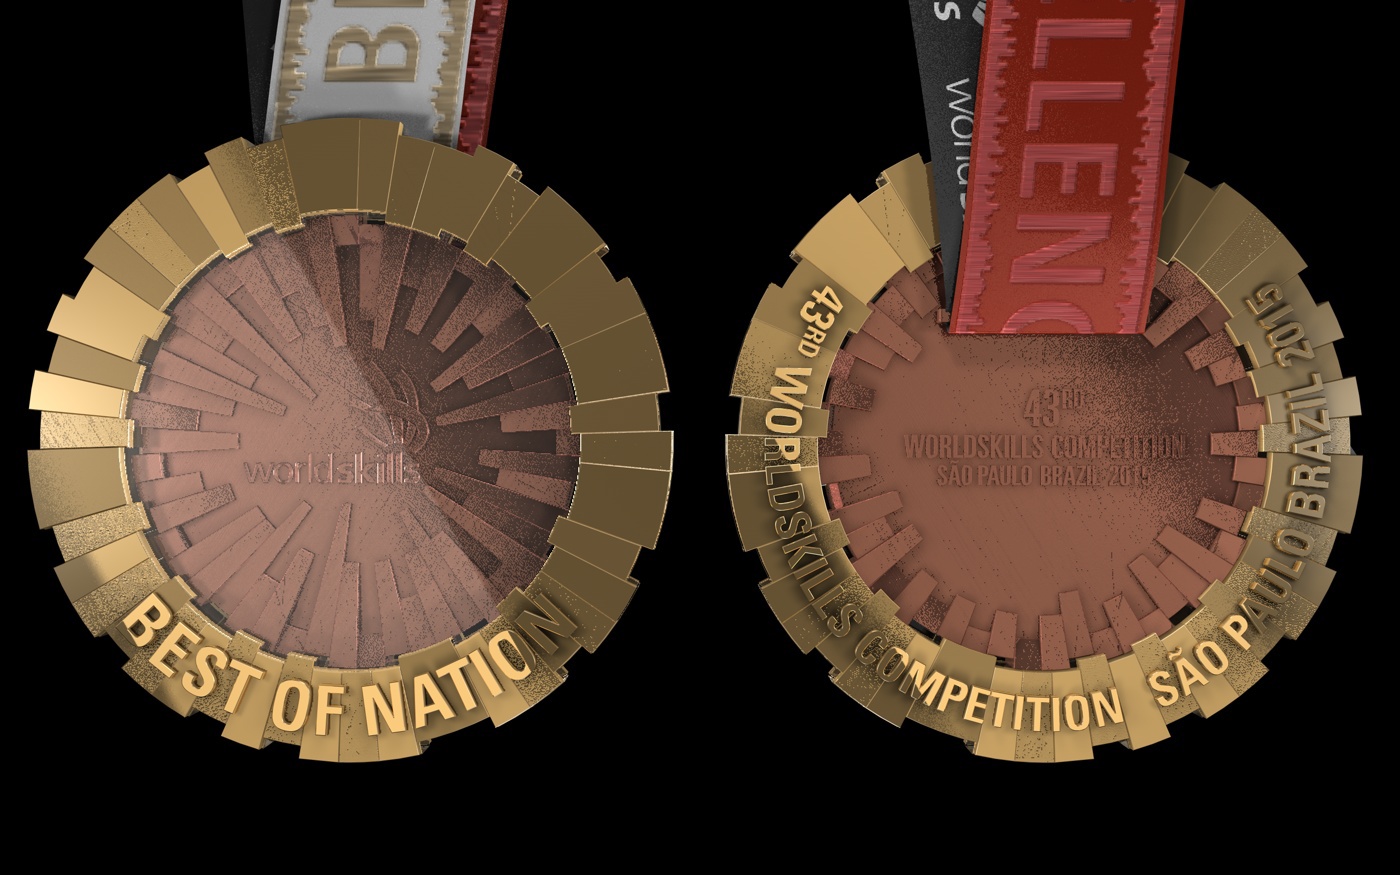 #worldskills wssp2015 Medal design Competition gold silver best bronze Medalha campeão criação equipe